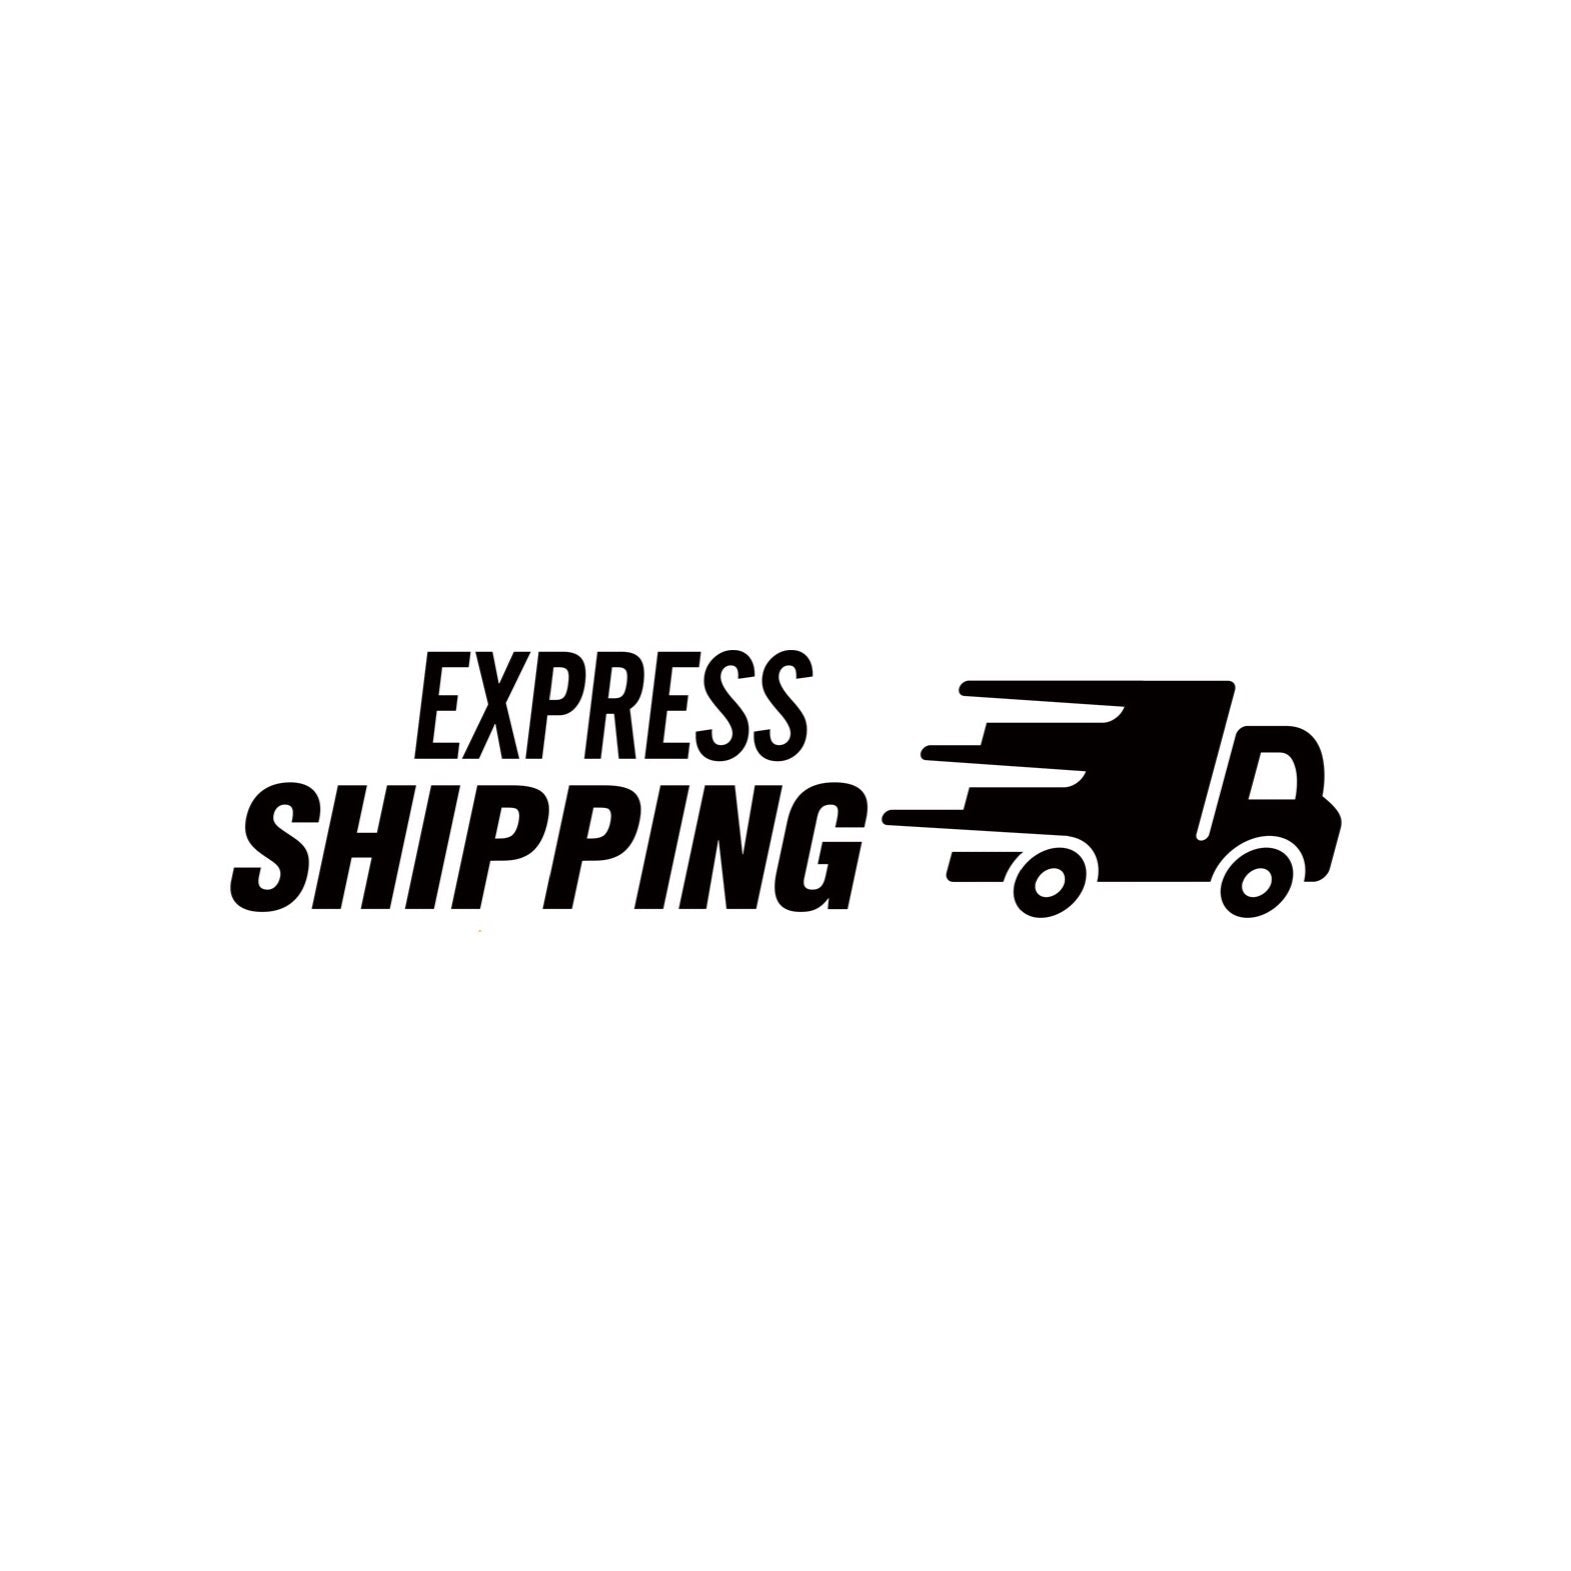 (AUS) Express Shipping